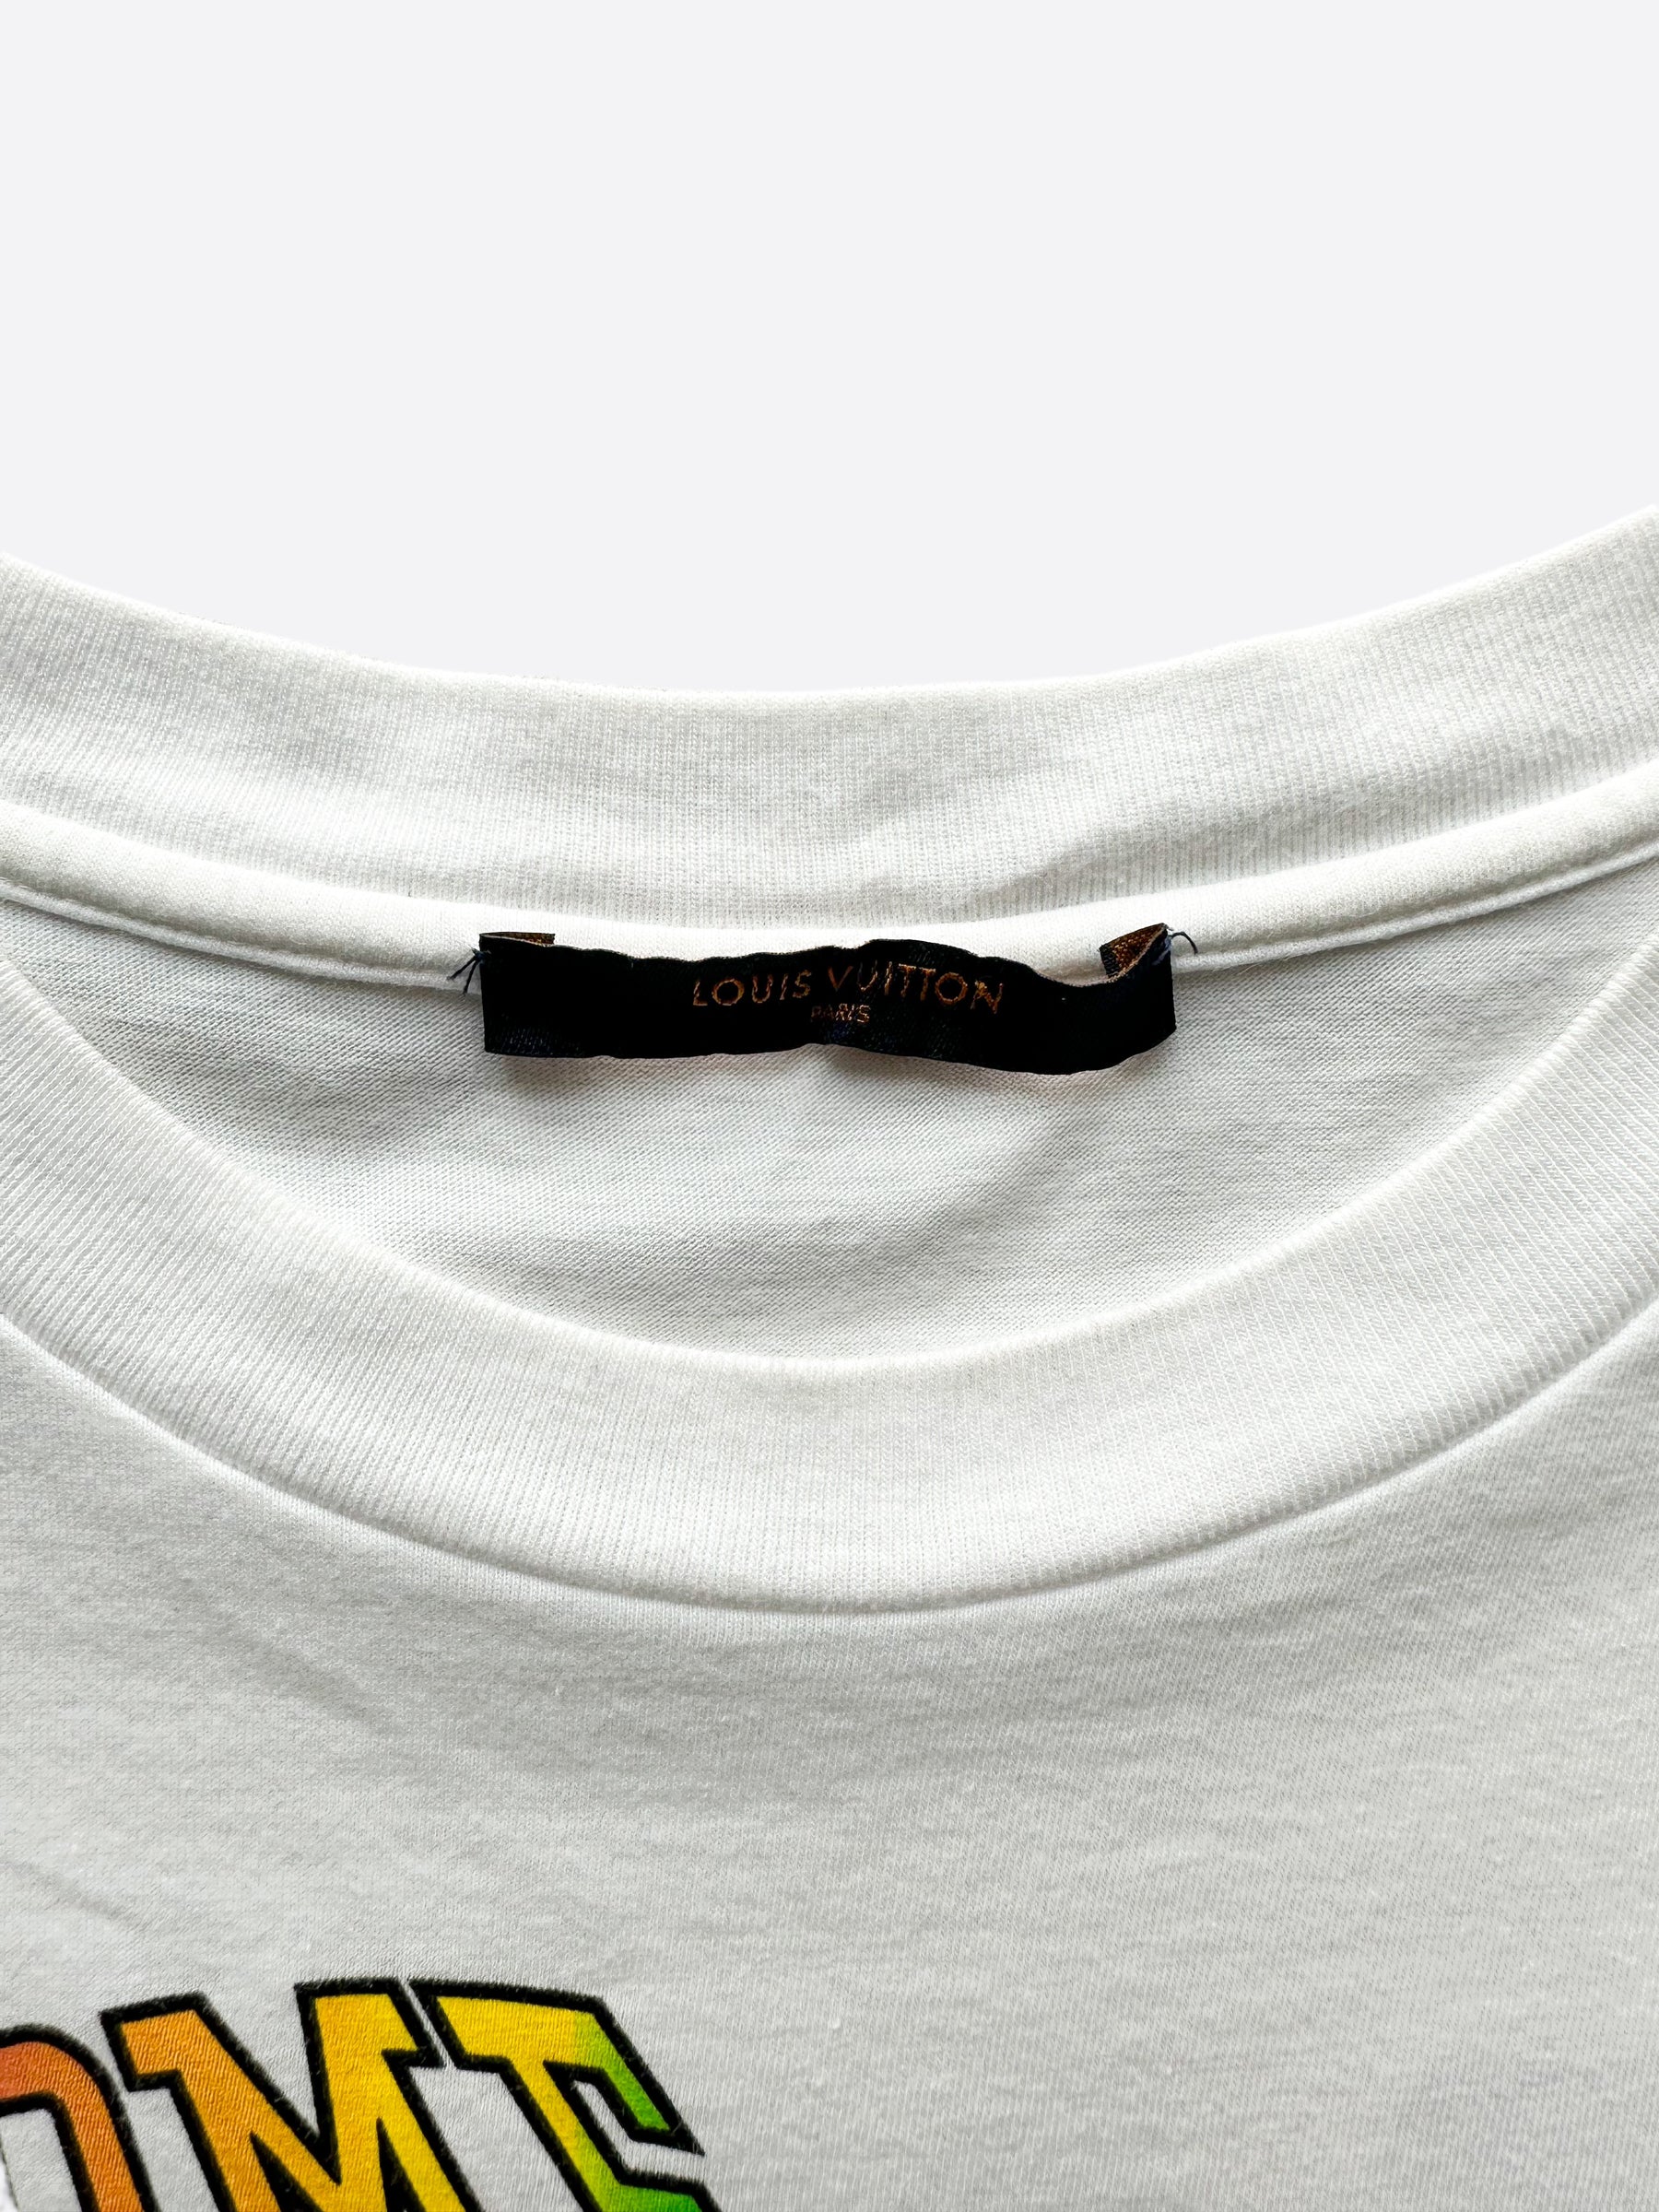 Louis Vuitton White Kansas Winds Printed Cotton T-Shirt L Louis Vuitton